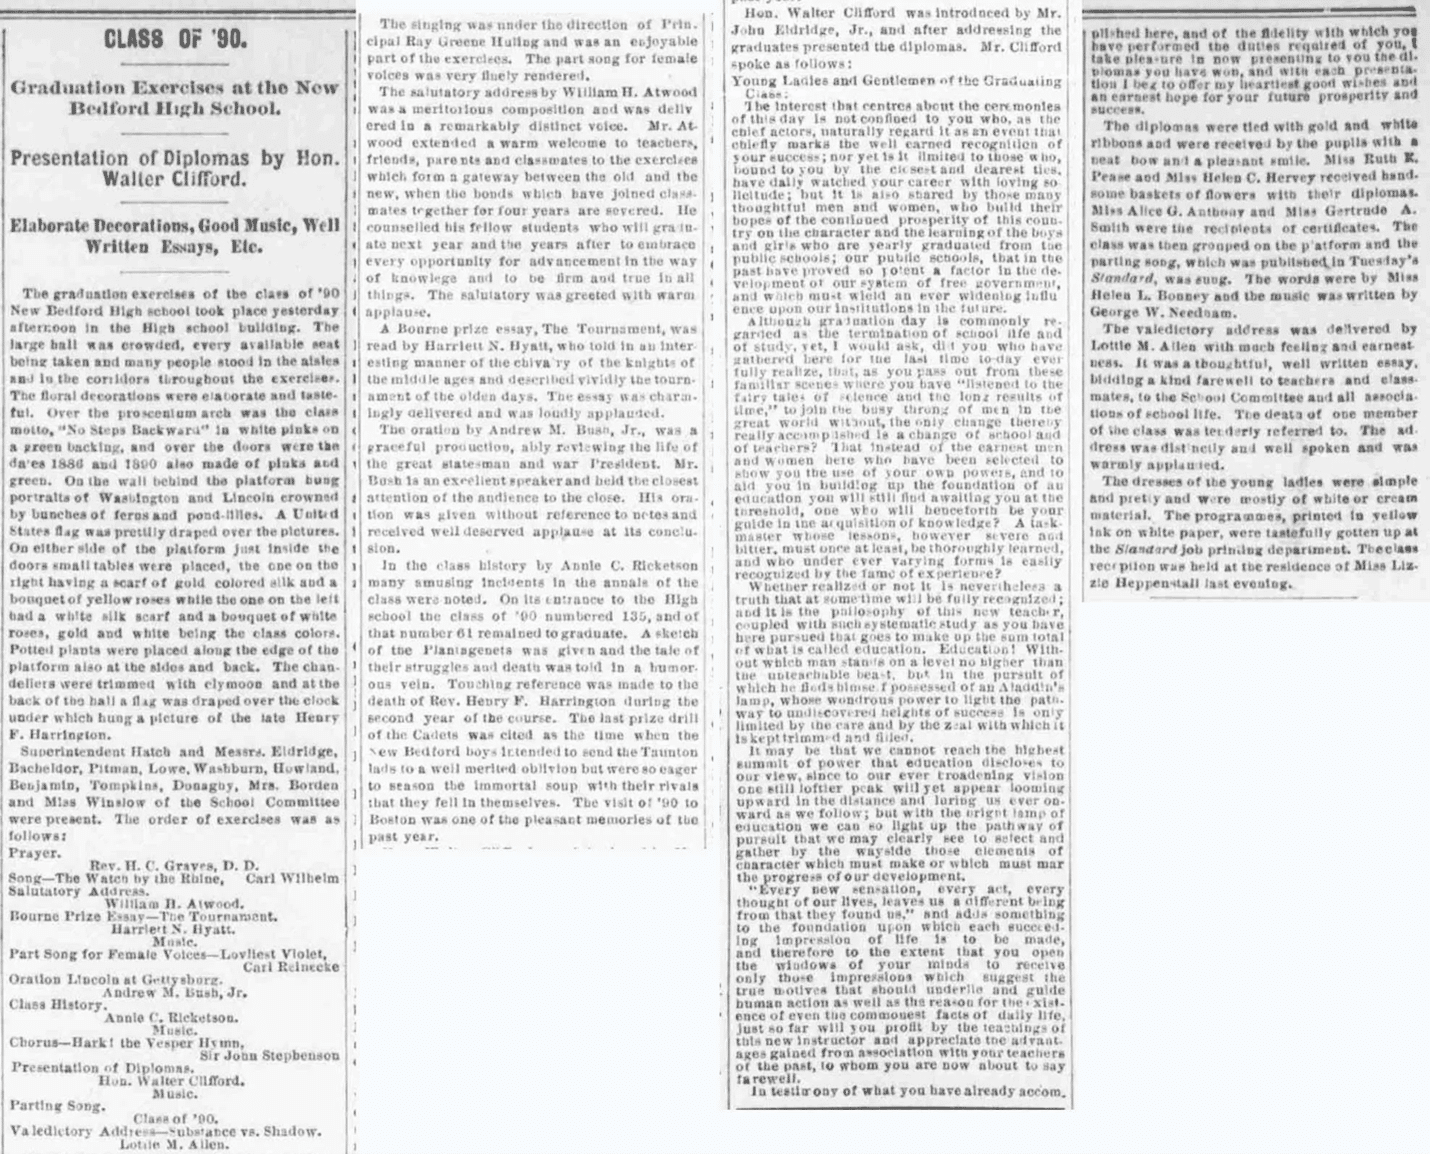 Class of ‘90,” newspaper article, The Evening Standard (New Bedford, Massachusetts), 28 June 1890, p. 2, col. 6.